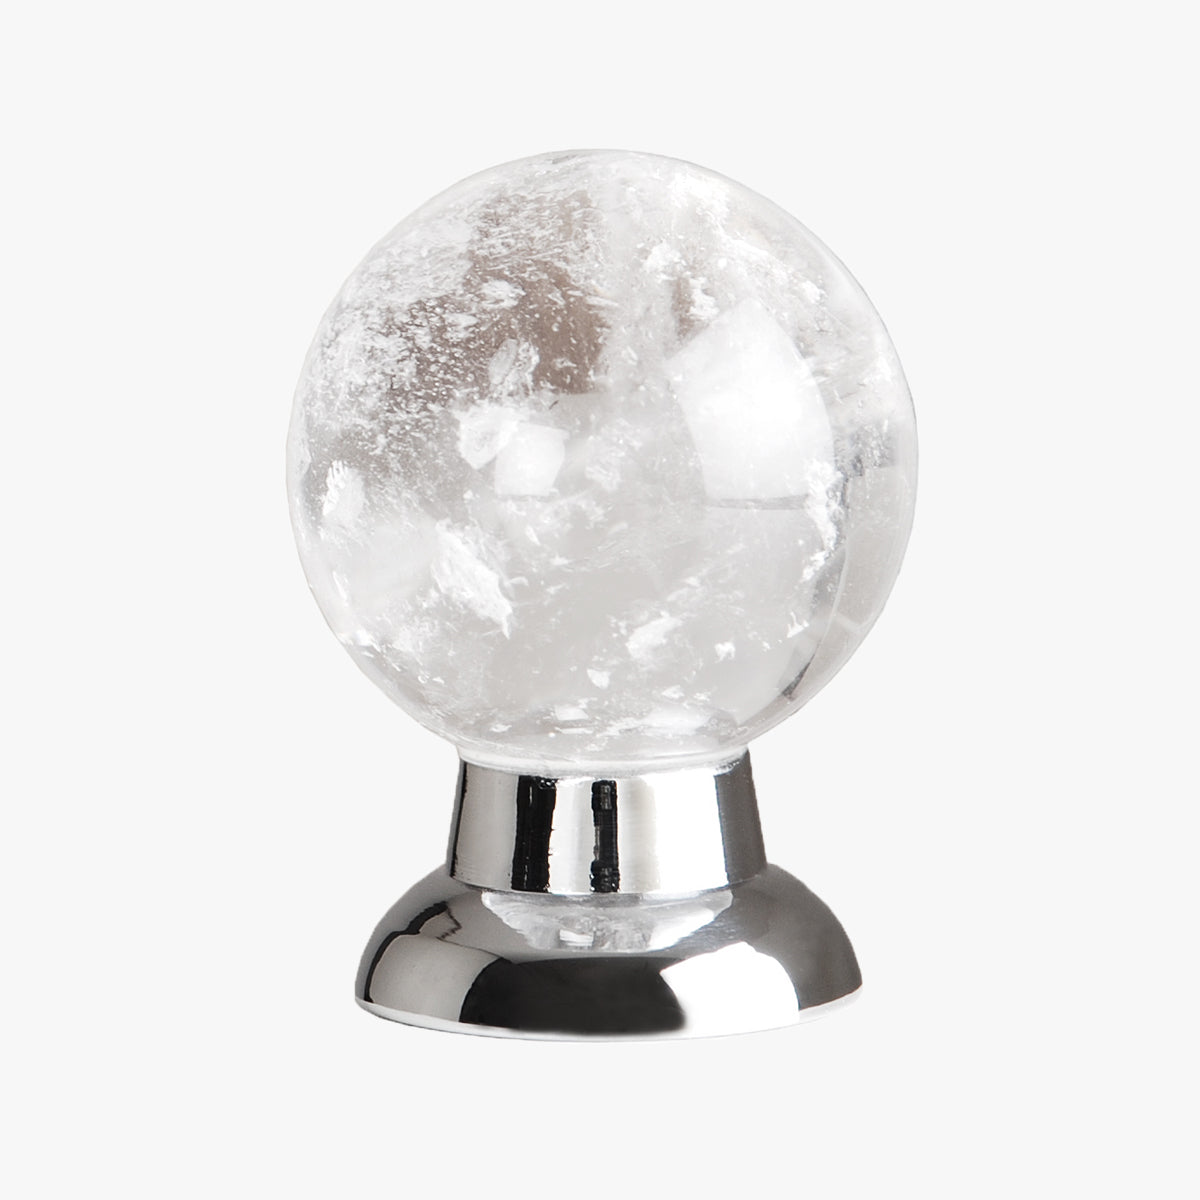 Sloane knob handmade in rock crystal and polished nickel by Matthew Studios